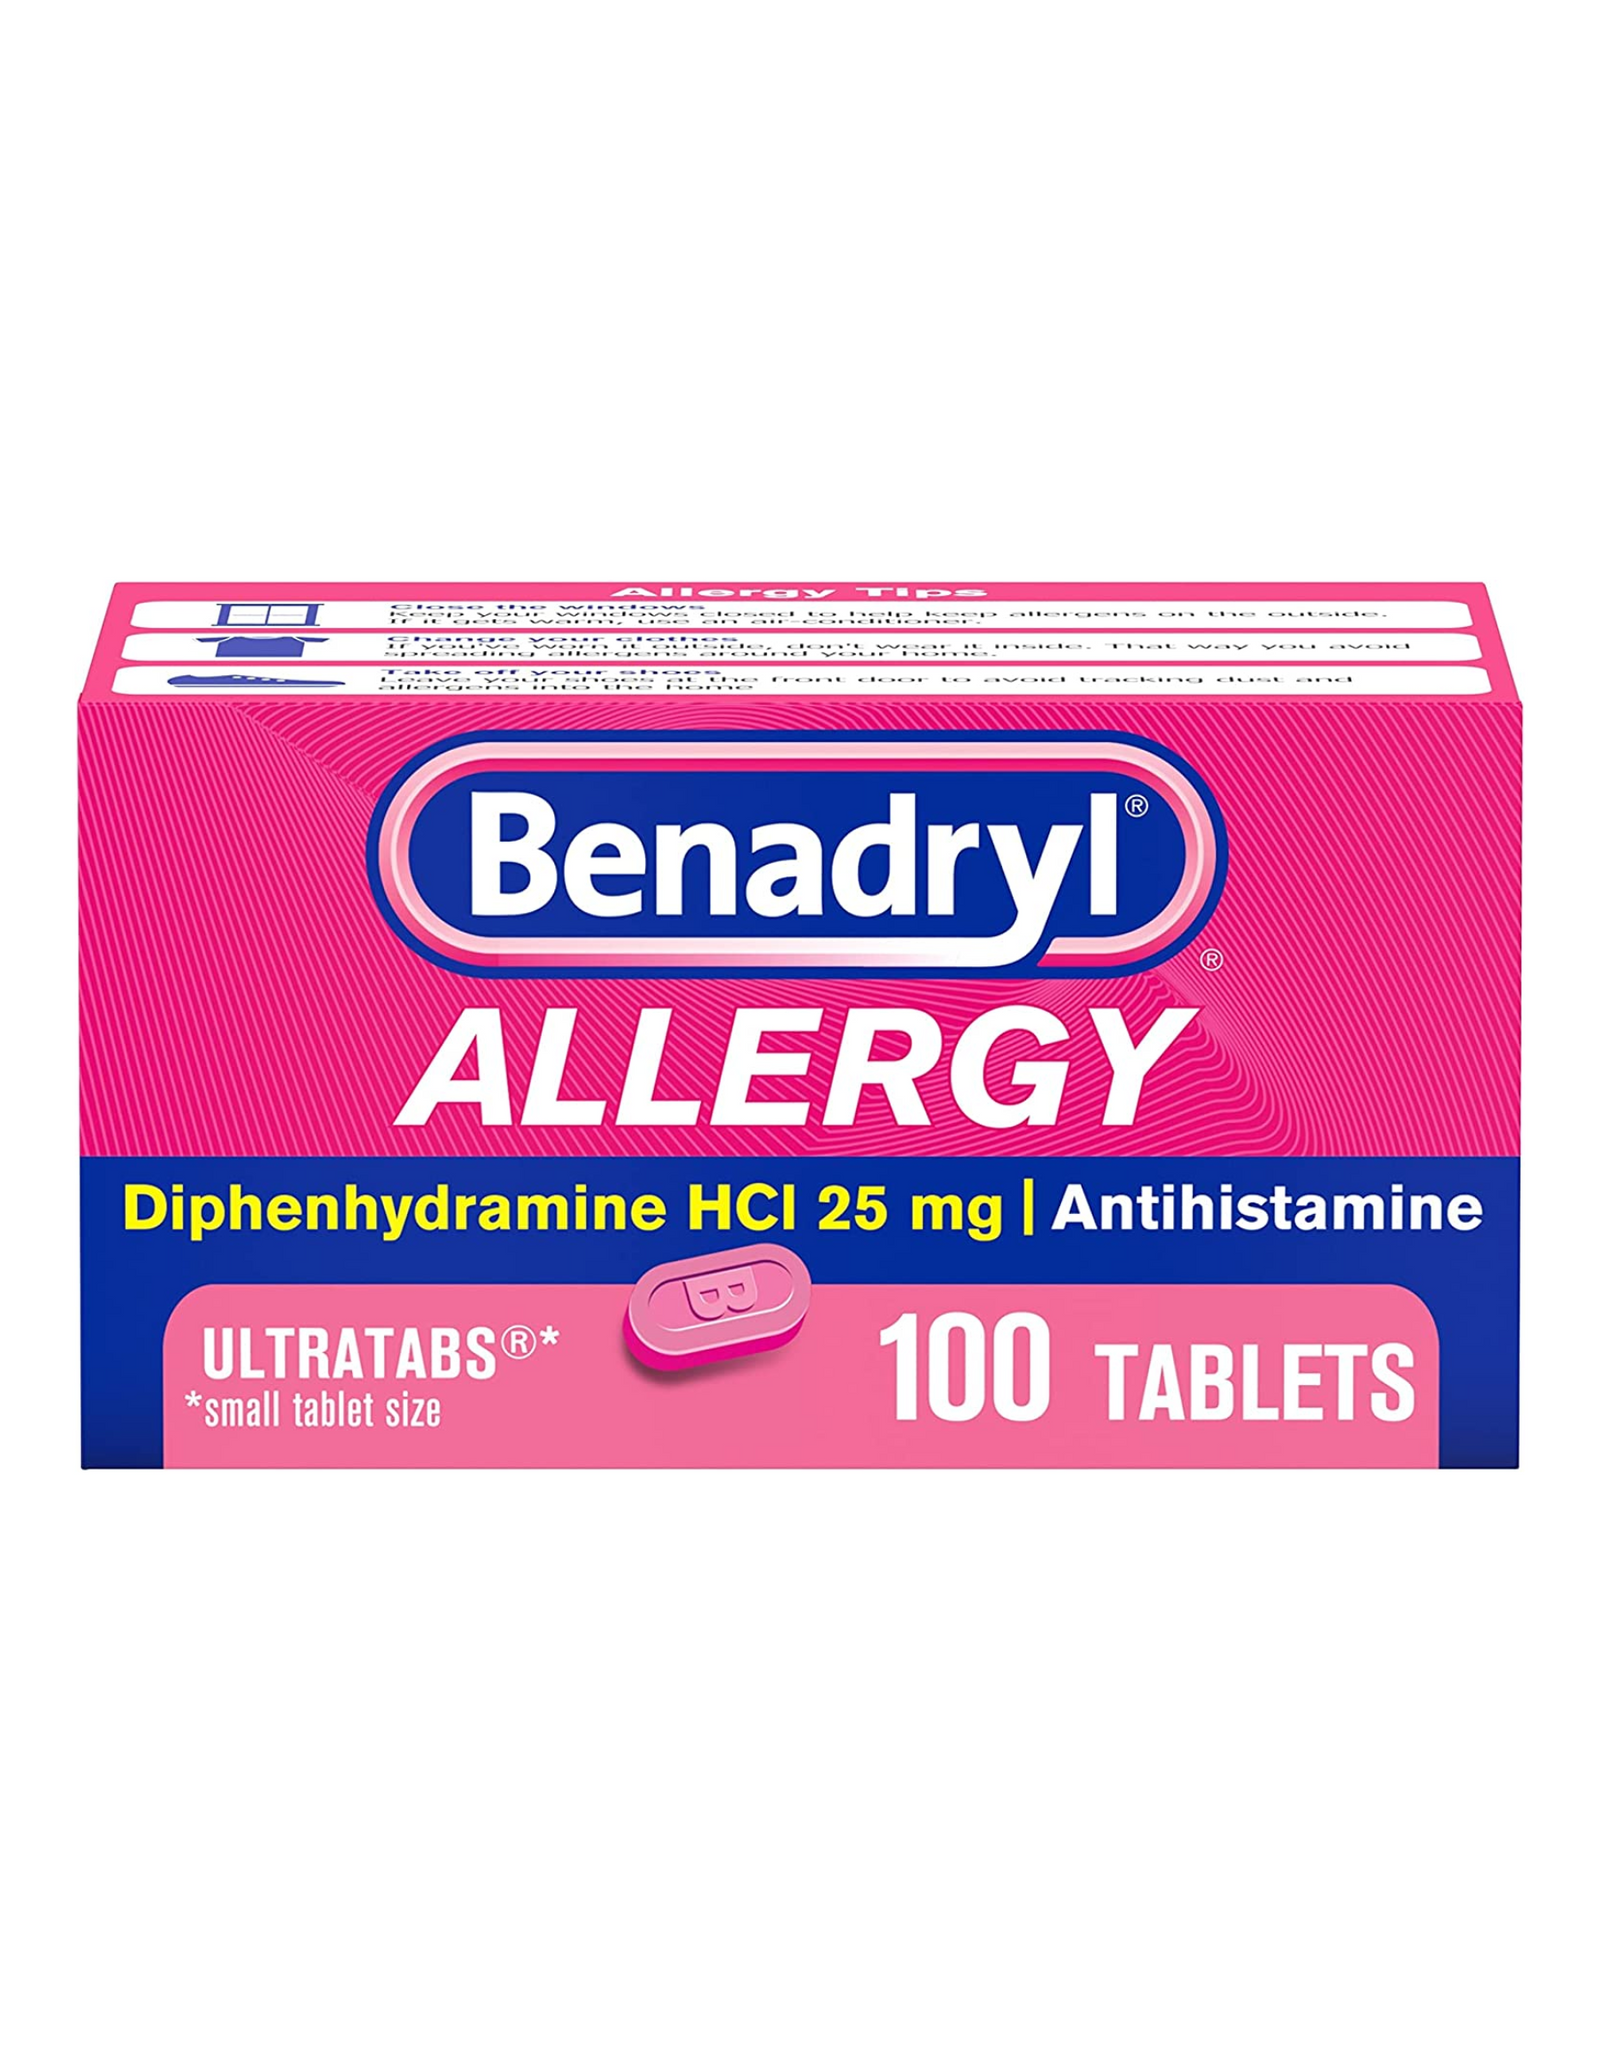 Benadryl Ultratabs Antihistamine Allergy Relief Medicine, Diphenhydramine HCl Tablets, 100 ct